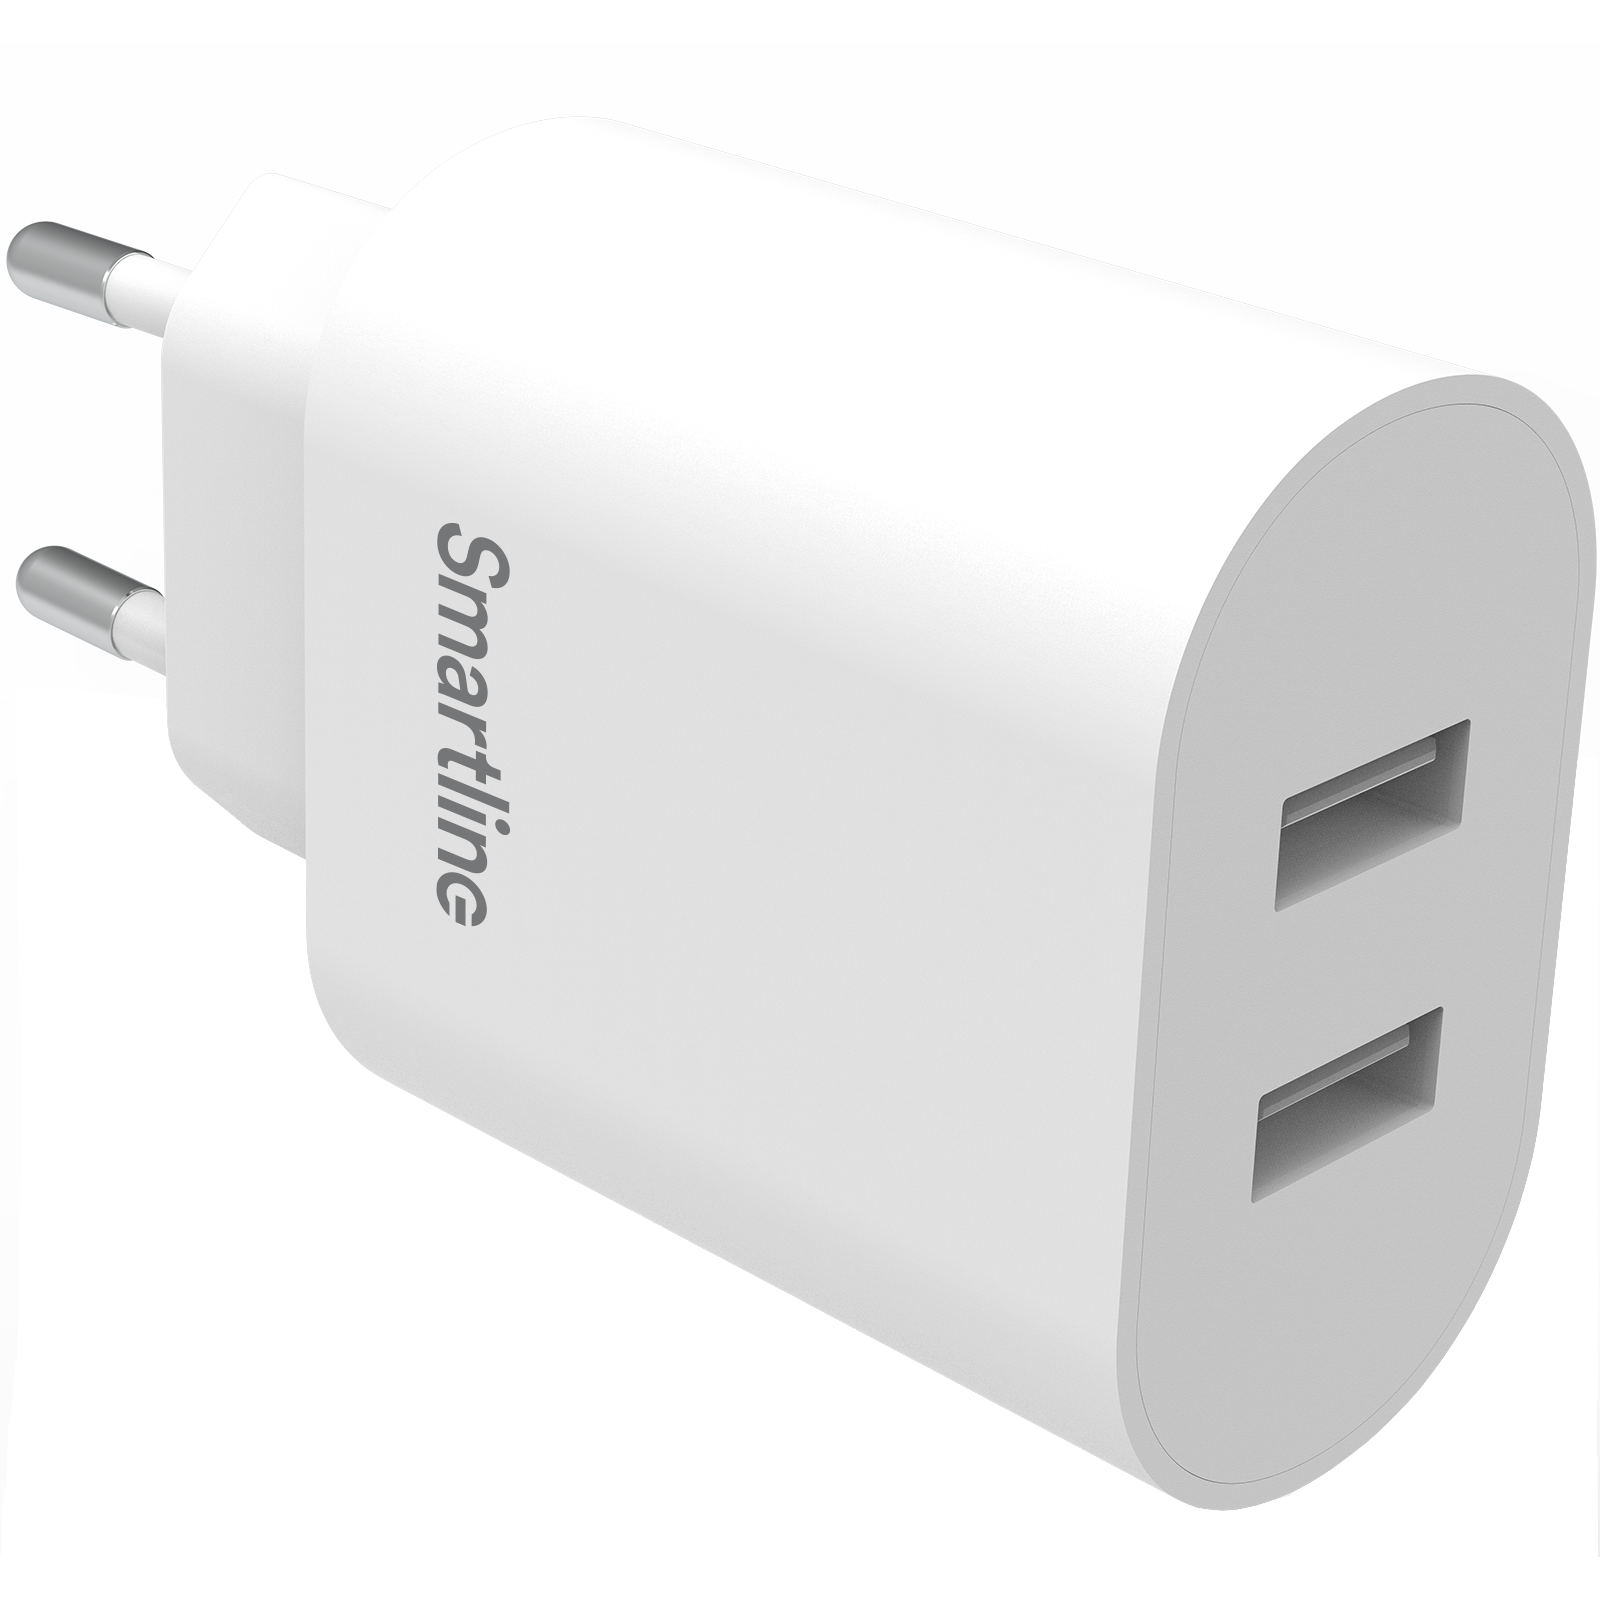 Dual USB Wall Charger valkoinen